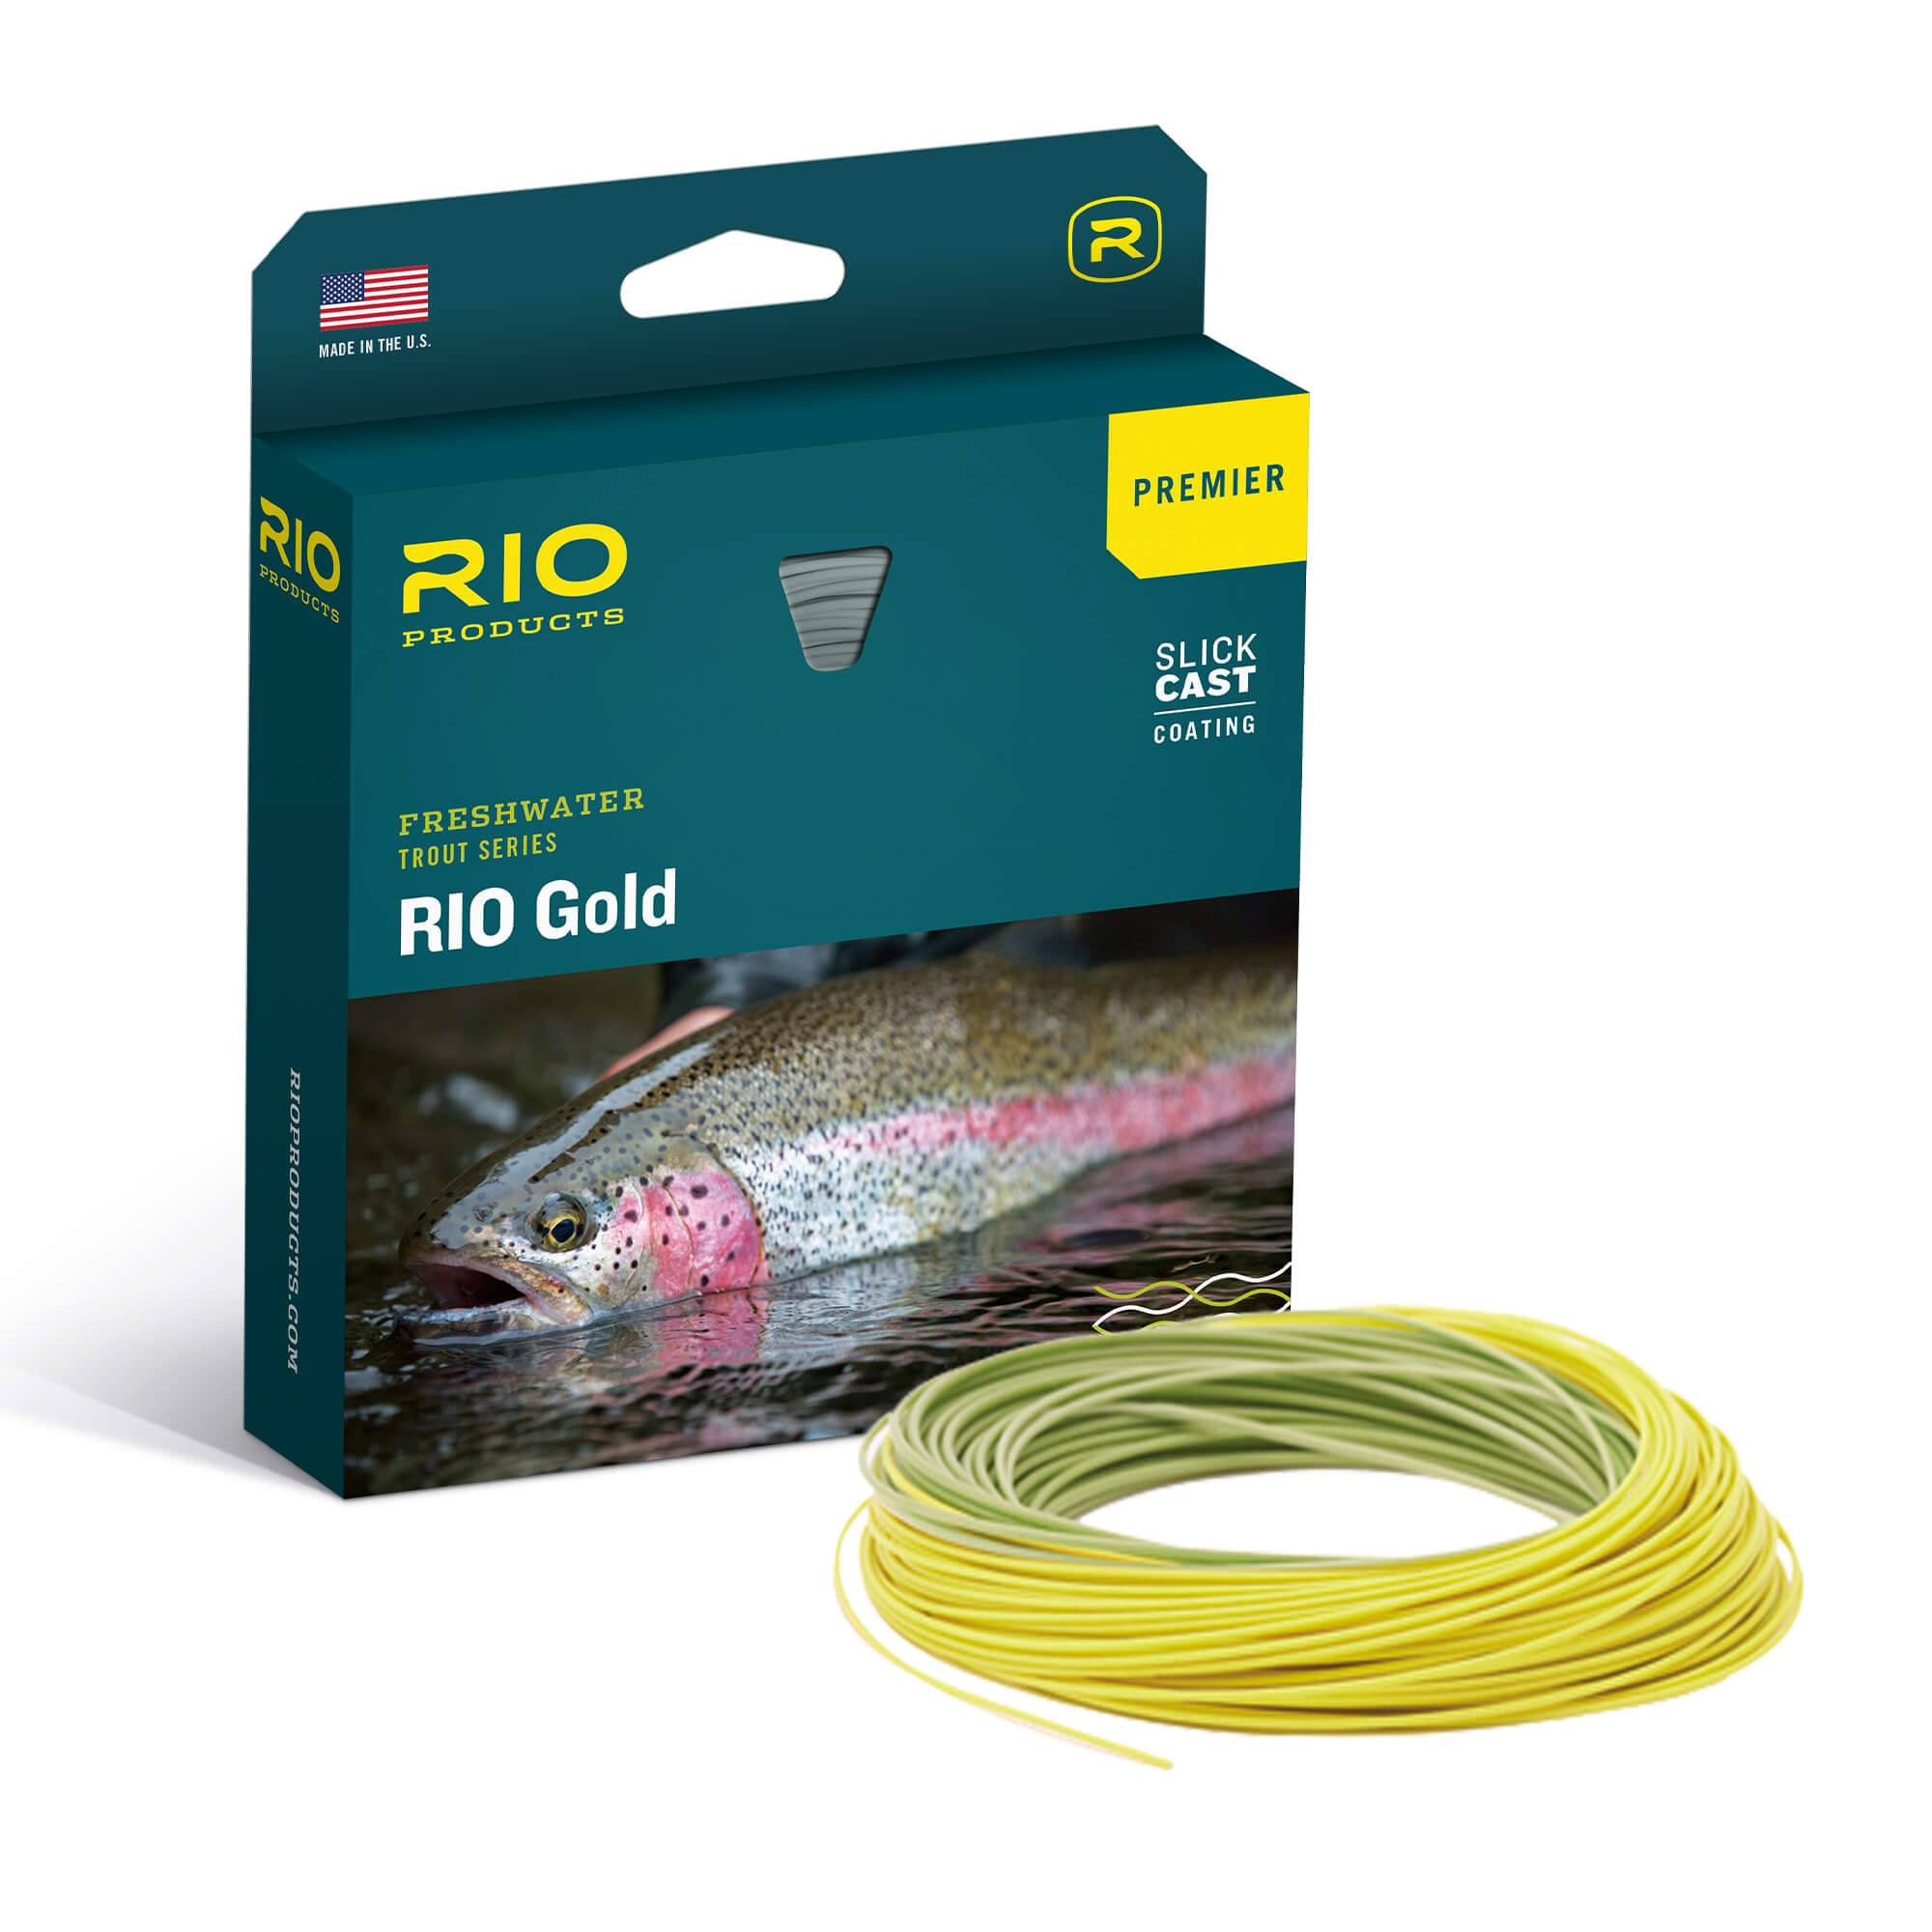 https://www.guideflyfishing.co.uk/wp-content/uploads/2020/06/RIO-SLICKCAST-GOLD-PREMIER-FLY-LINE-BOX.jpg